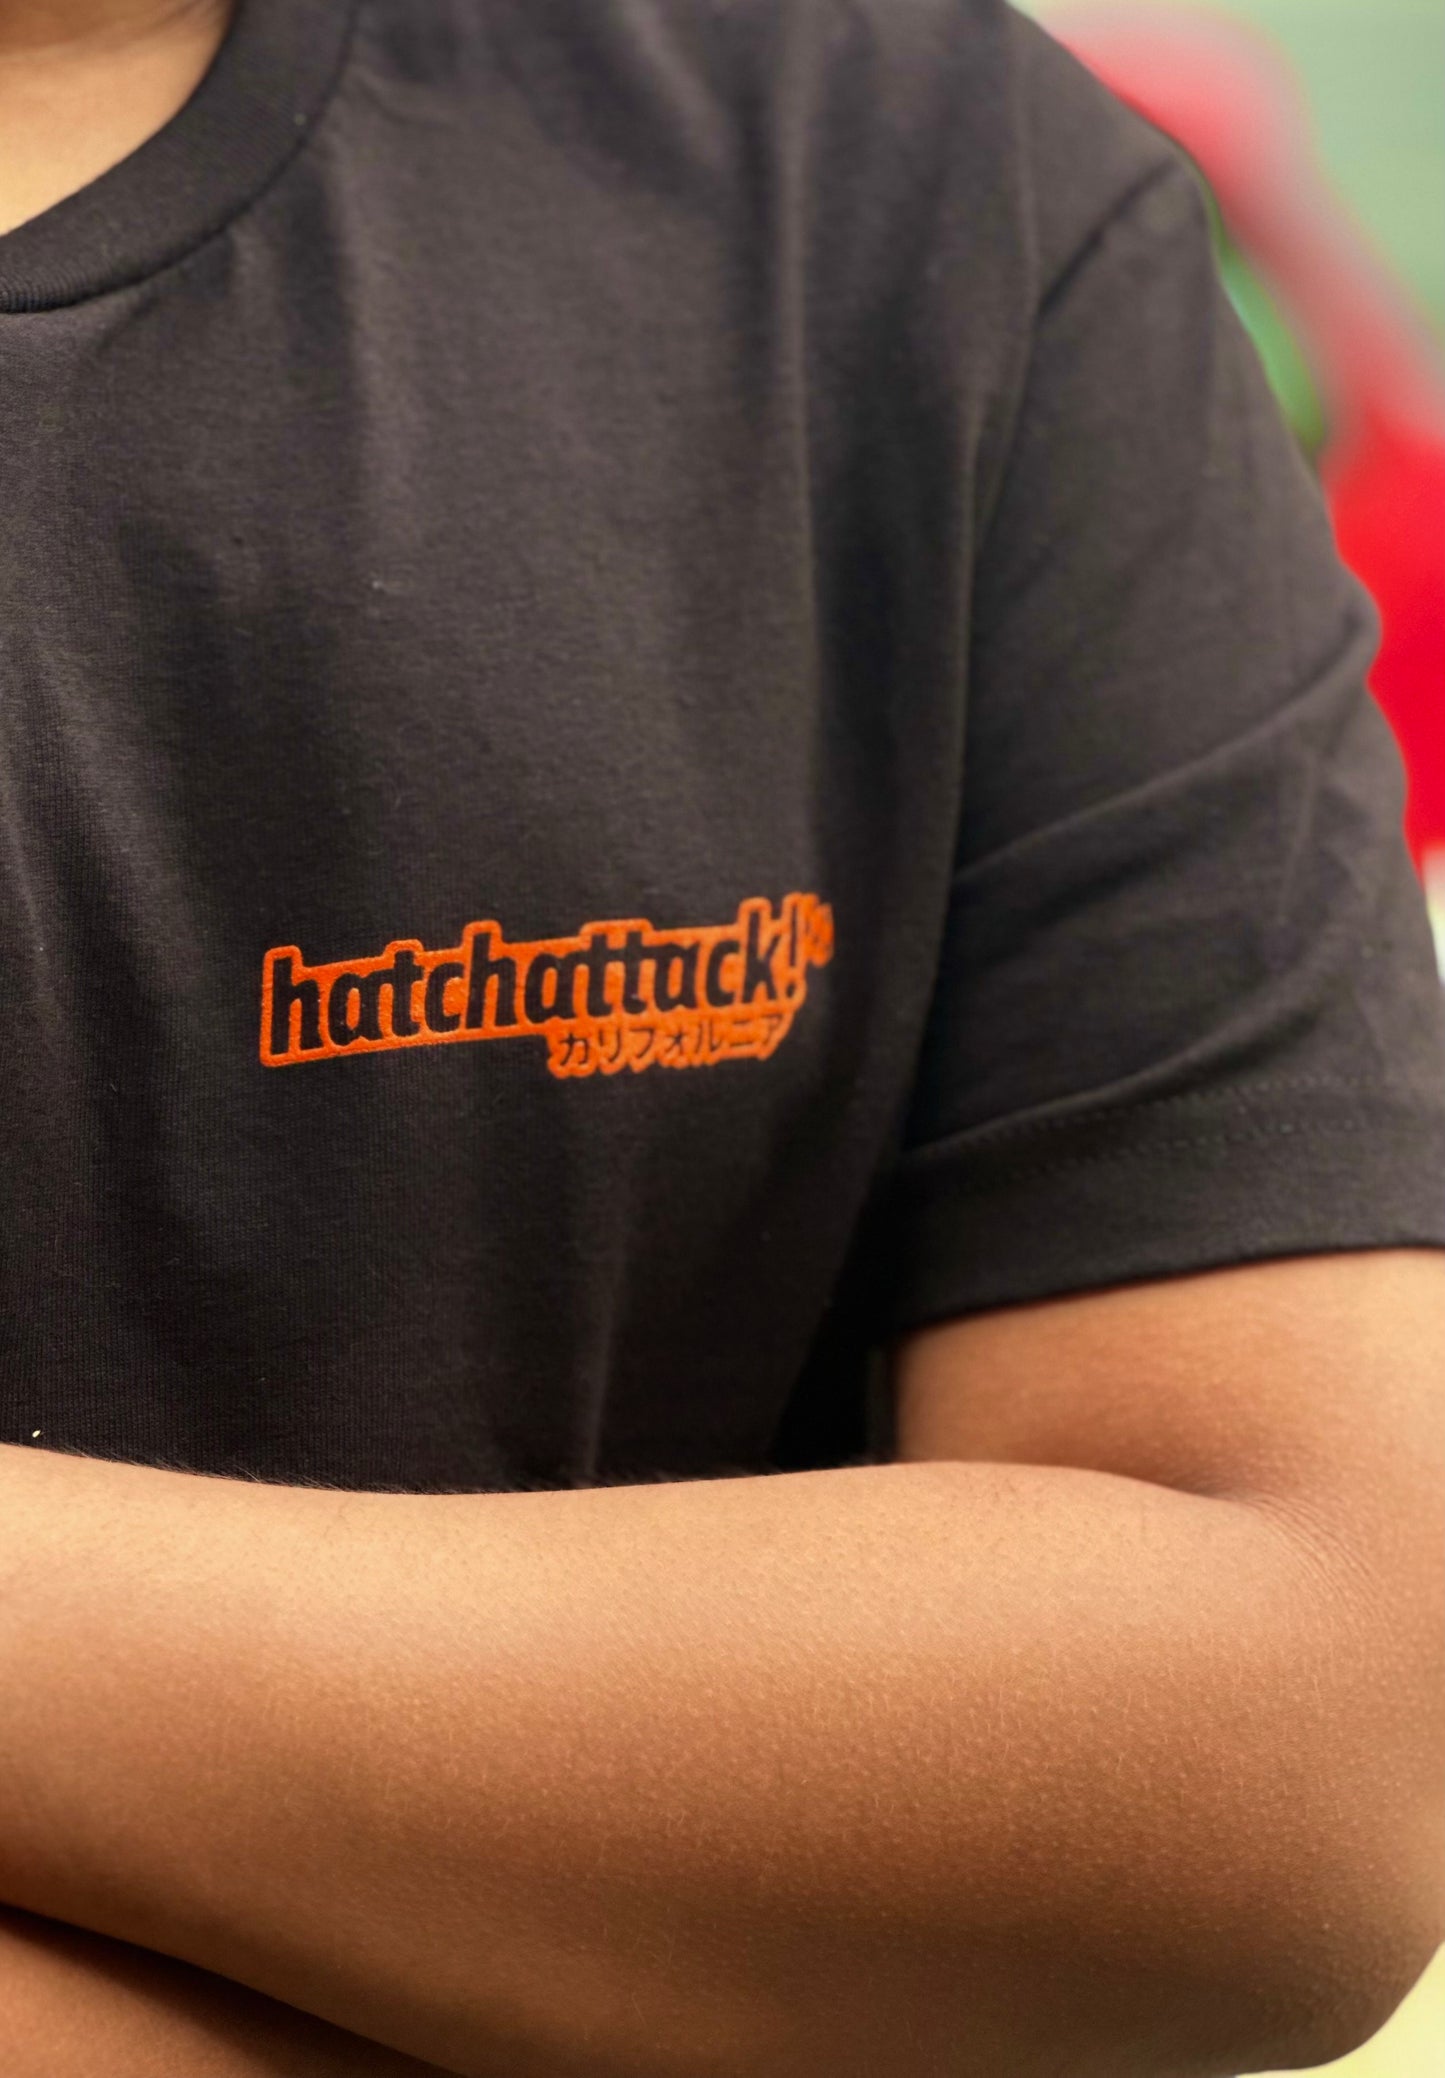 Hatchattack! CoFFee Club T-Shirt